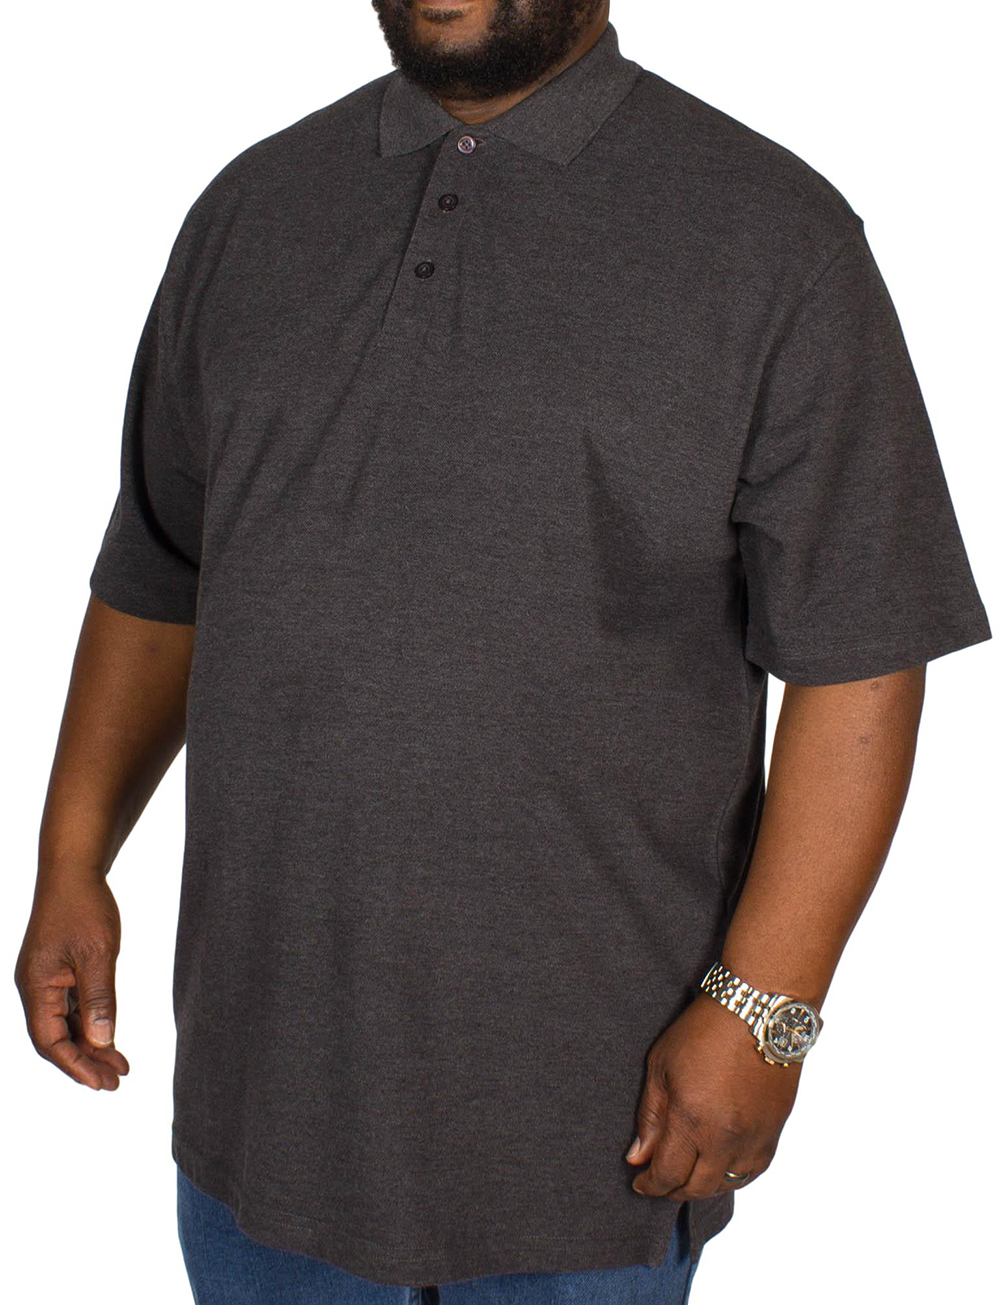 Large \u0026 Big Mens Polo Shirts - 3XL, 4XL 